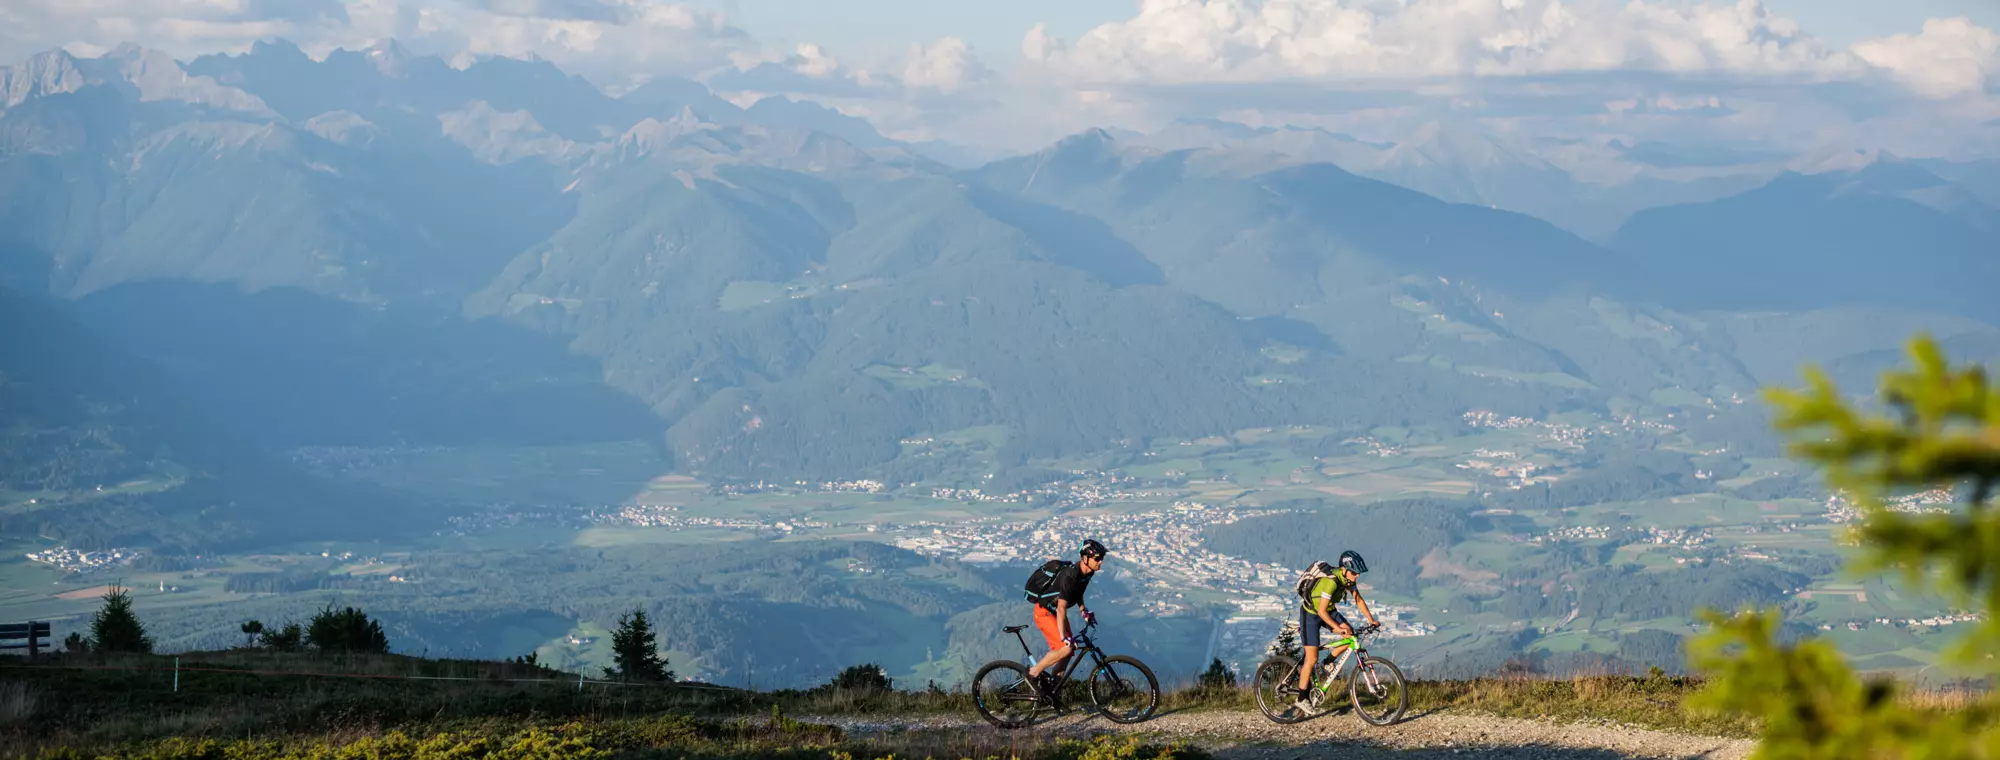 Dolomiti, Cyclepath, Mountainbike, E-bike, Mountains, Family, Brunico, Riscone